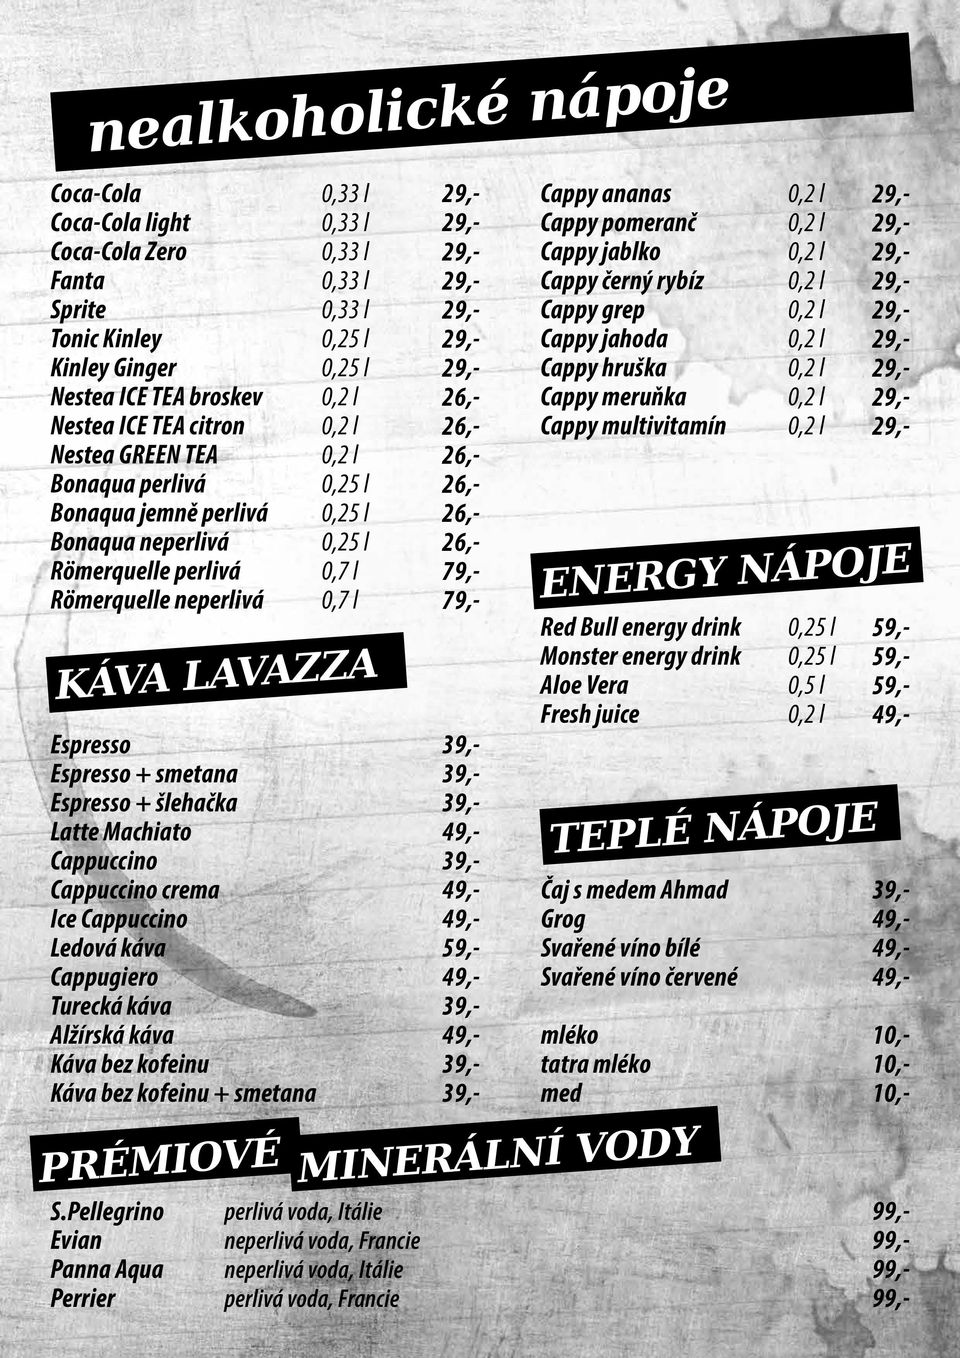 Pellegrino Evian Panna Aqua Perrier 0,7 l 0,7 l KÁVA LAVAZZA Espresso Espresso + smetana Espresso + šlehačka Latte Machiato Cappuccino Cappuccino crema Ice Cappuccino Ledová káva Cappugiero Turecká